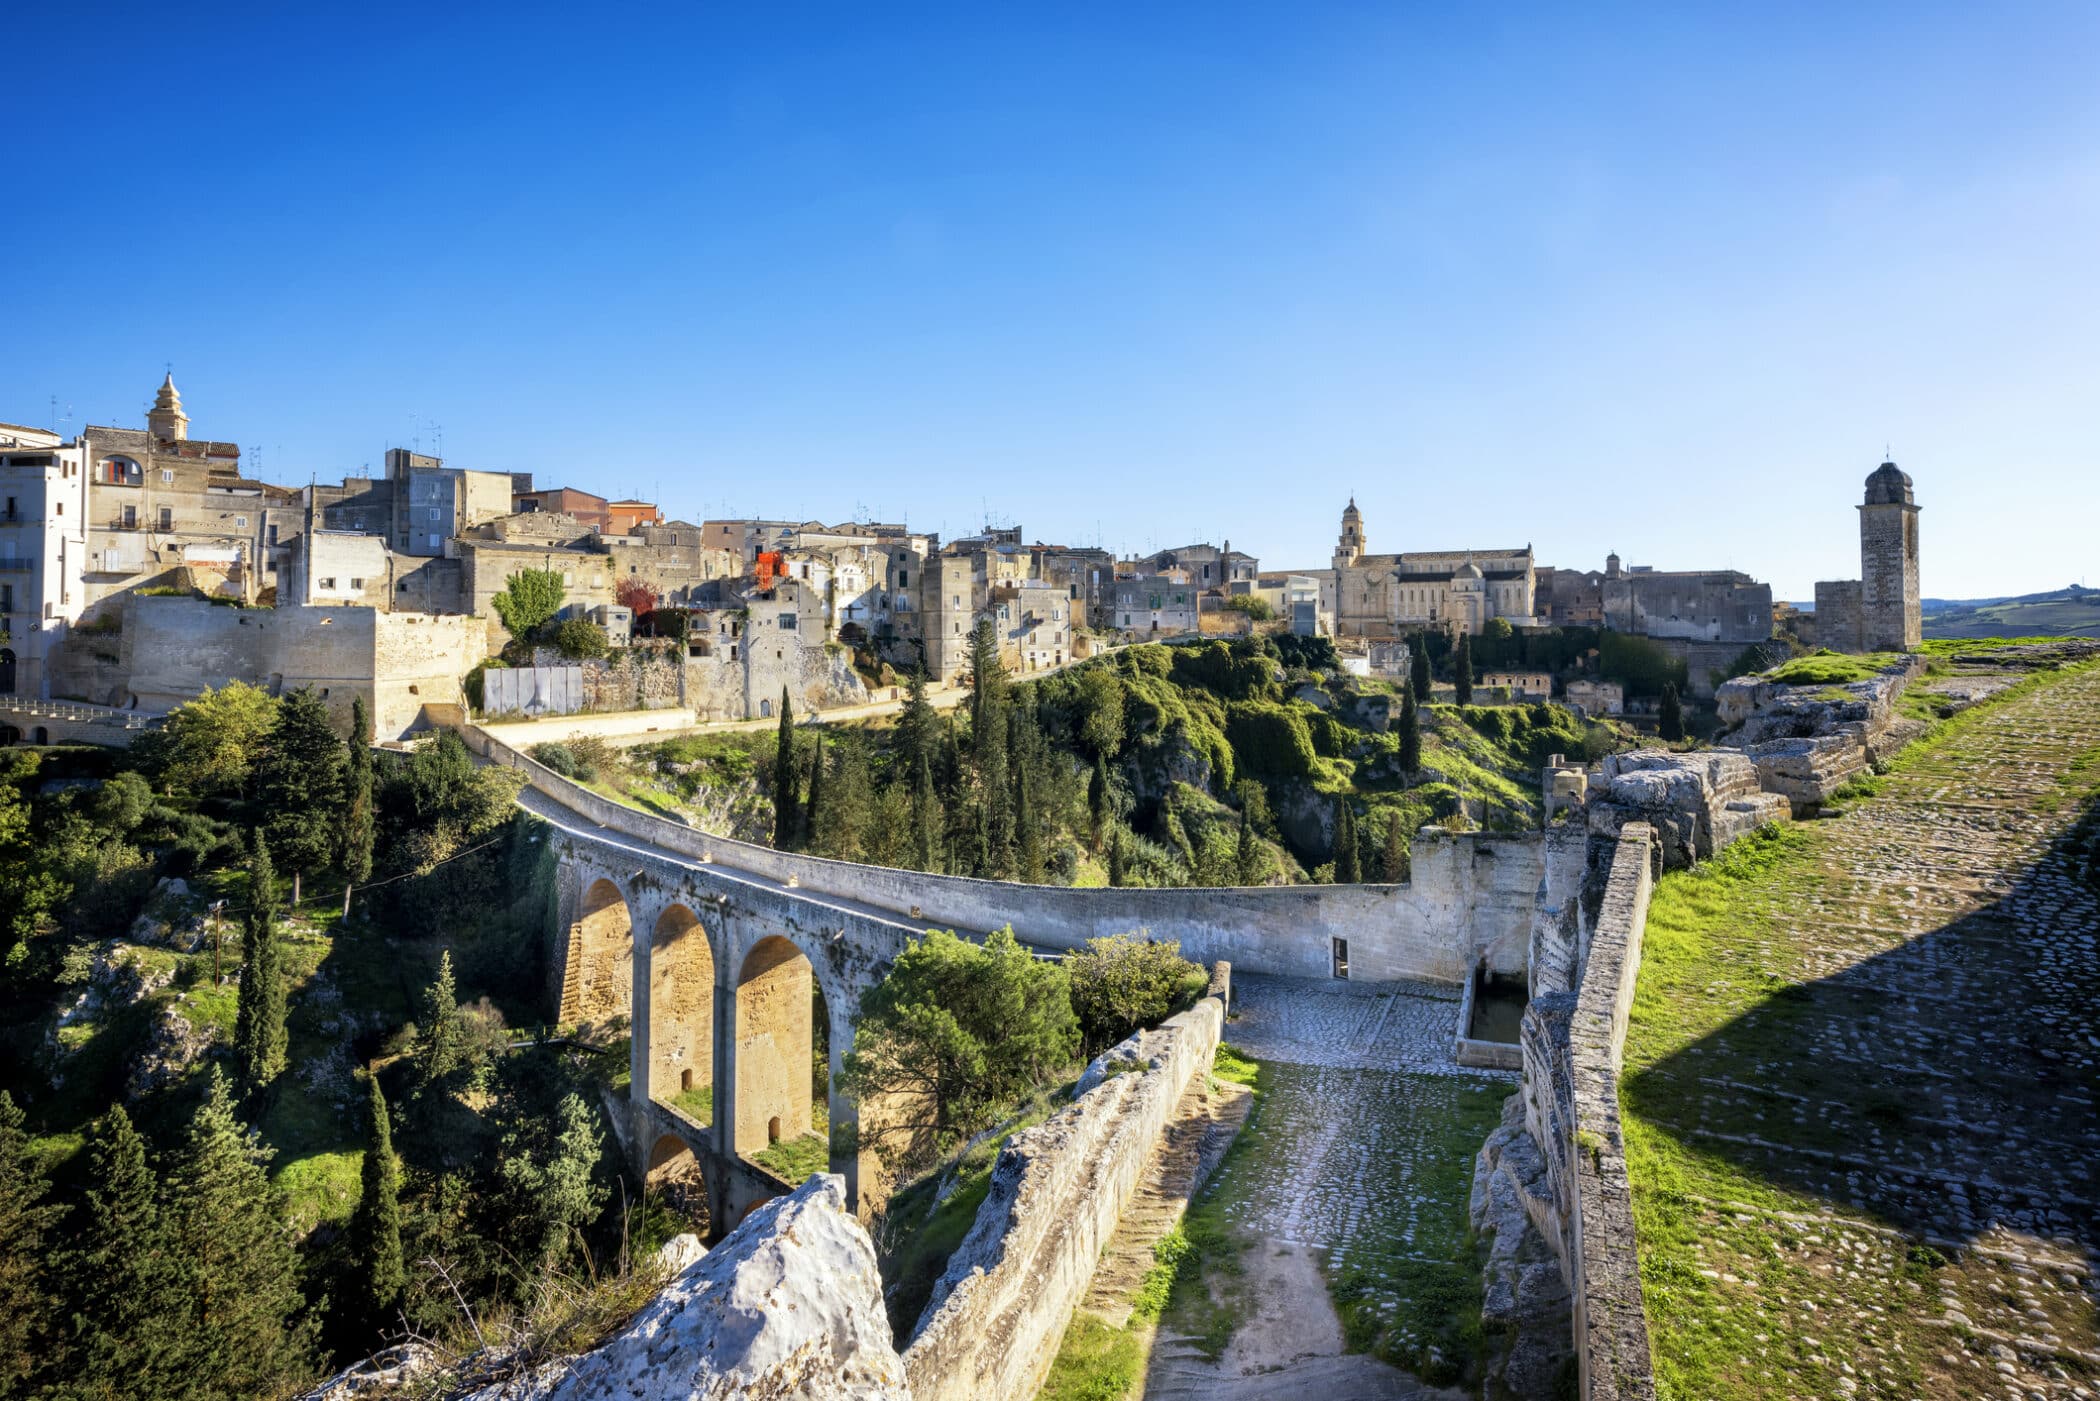 Altamura: Gravina in Puglia, with the Roman two-level bridge that extends over the canyon. Apulia, Italy